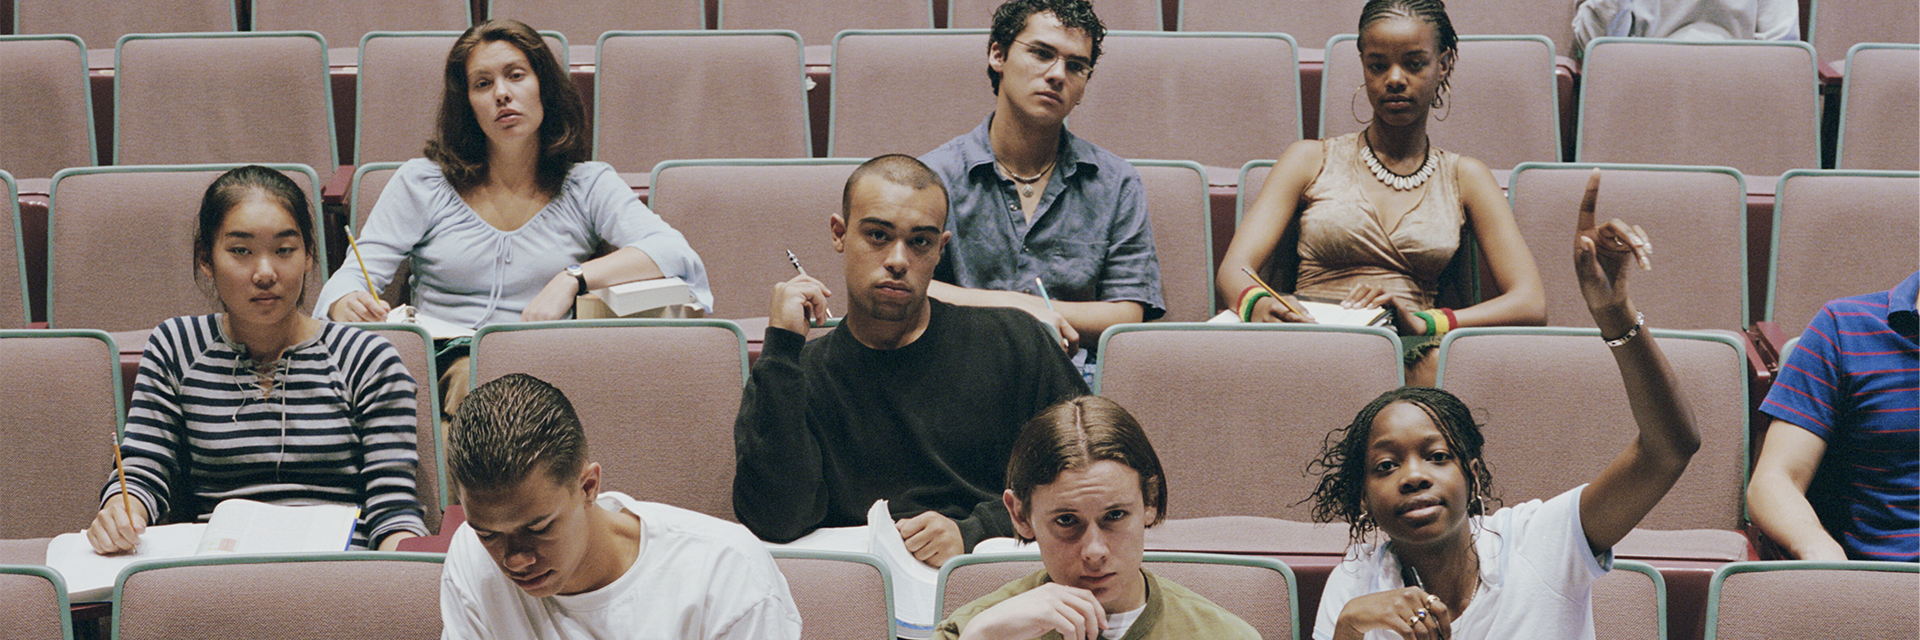 High school students sitting in a school auditorium